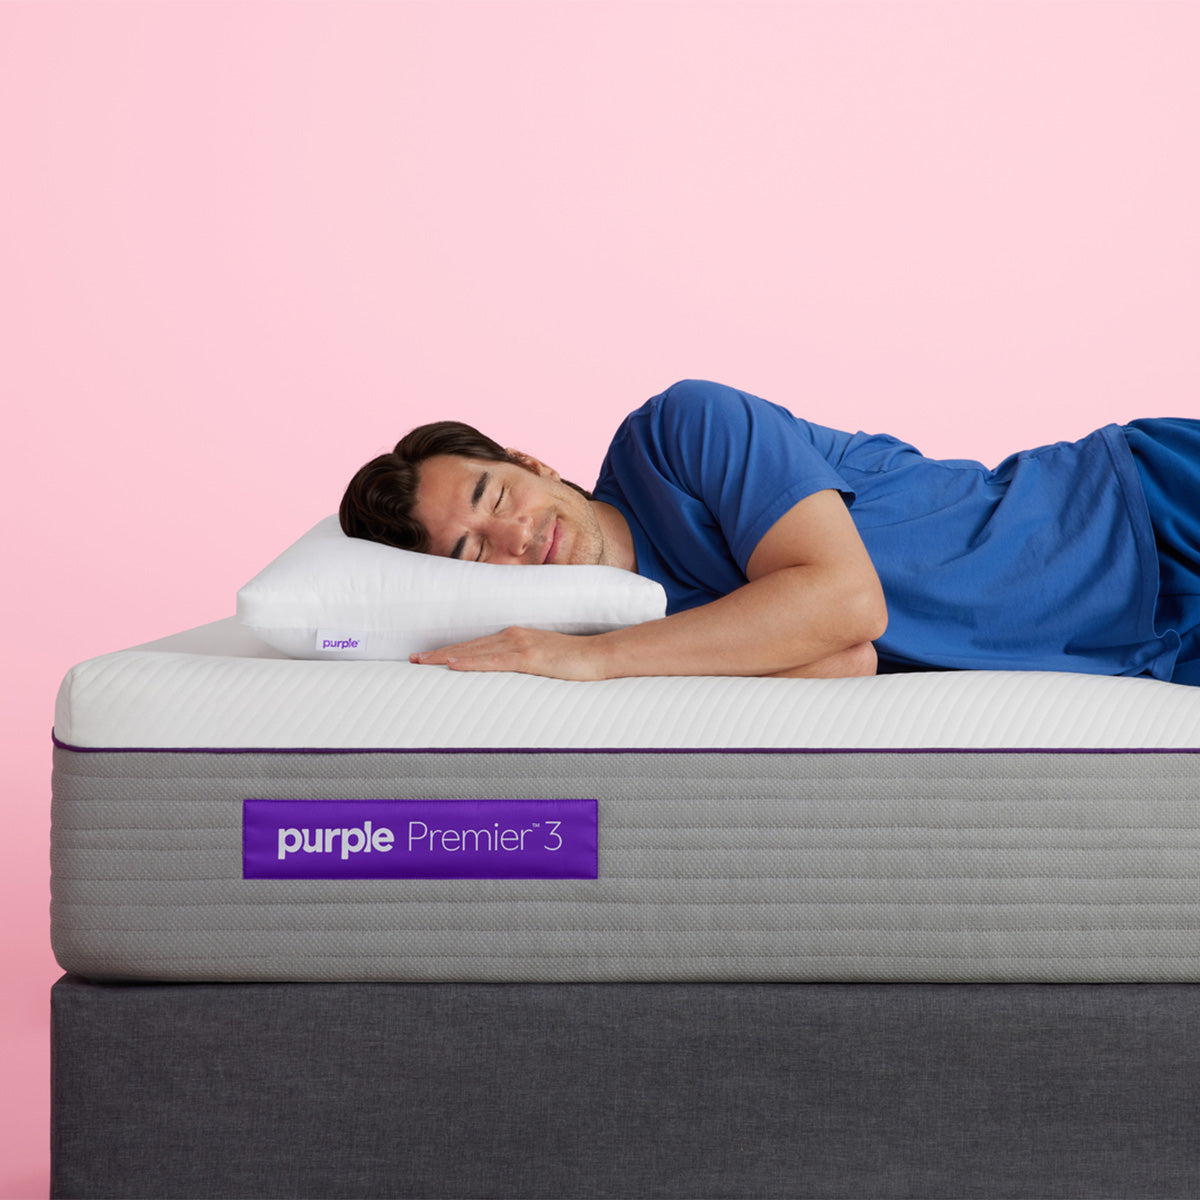 Man Sleeping On A Purple Premier 3 Mattress With A Purple Cloud Pillow